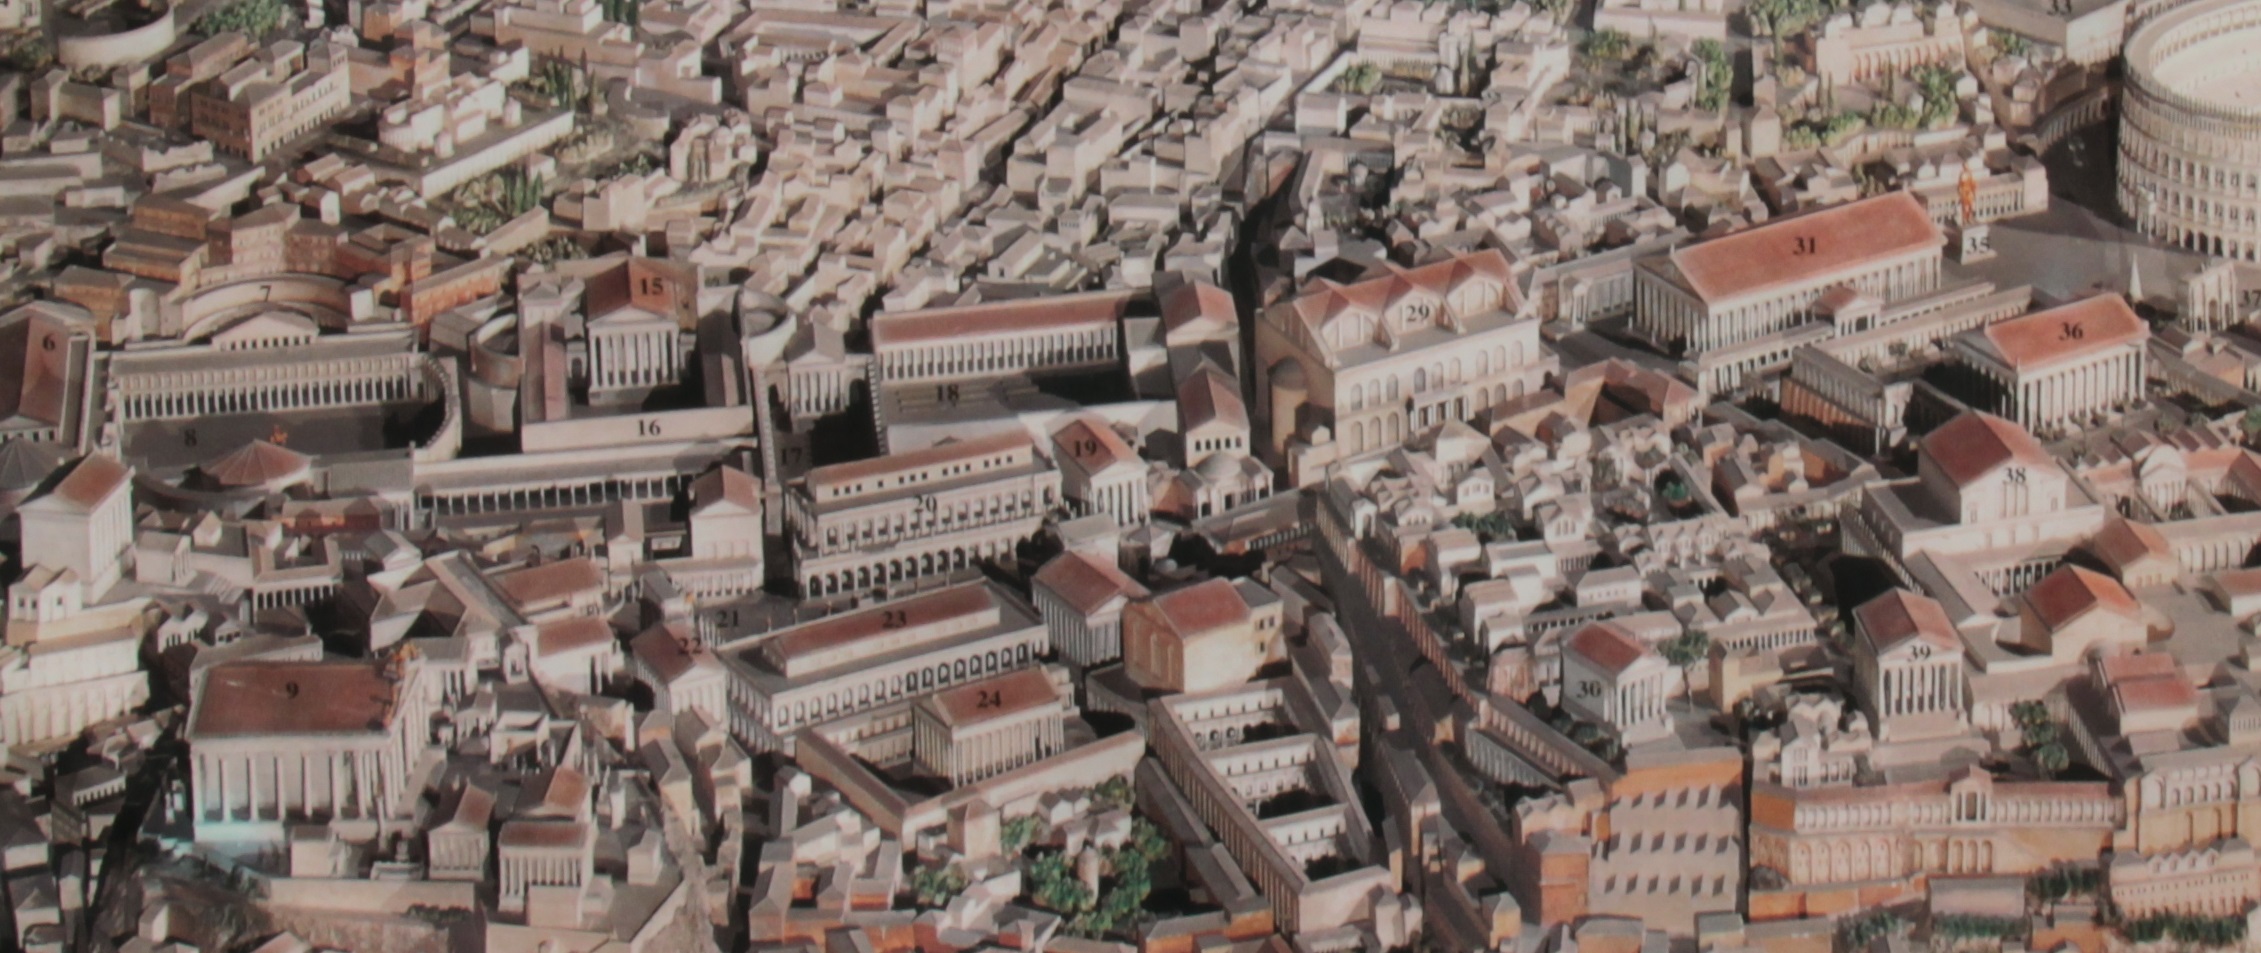 Римский форум в 4 веке